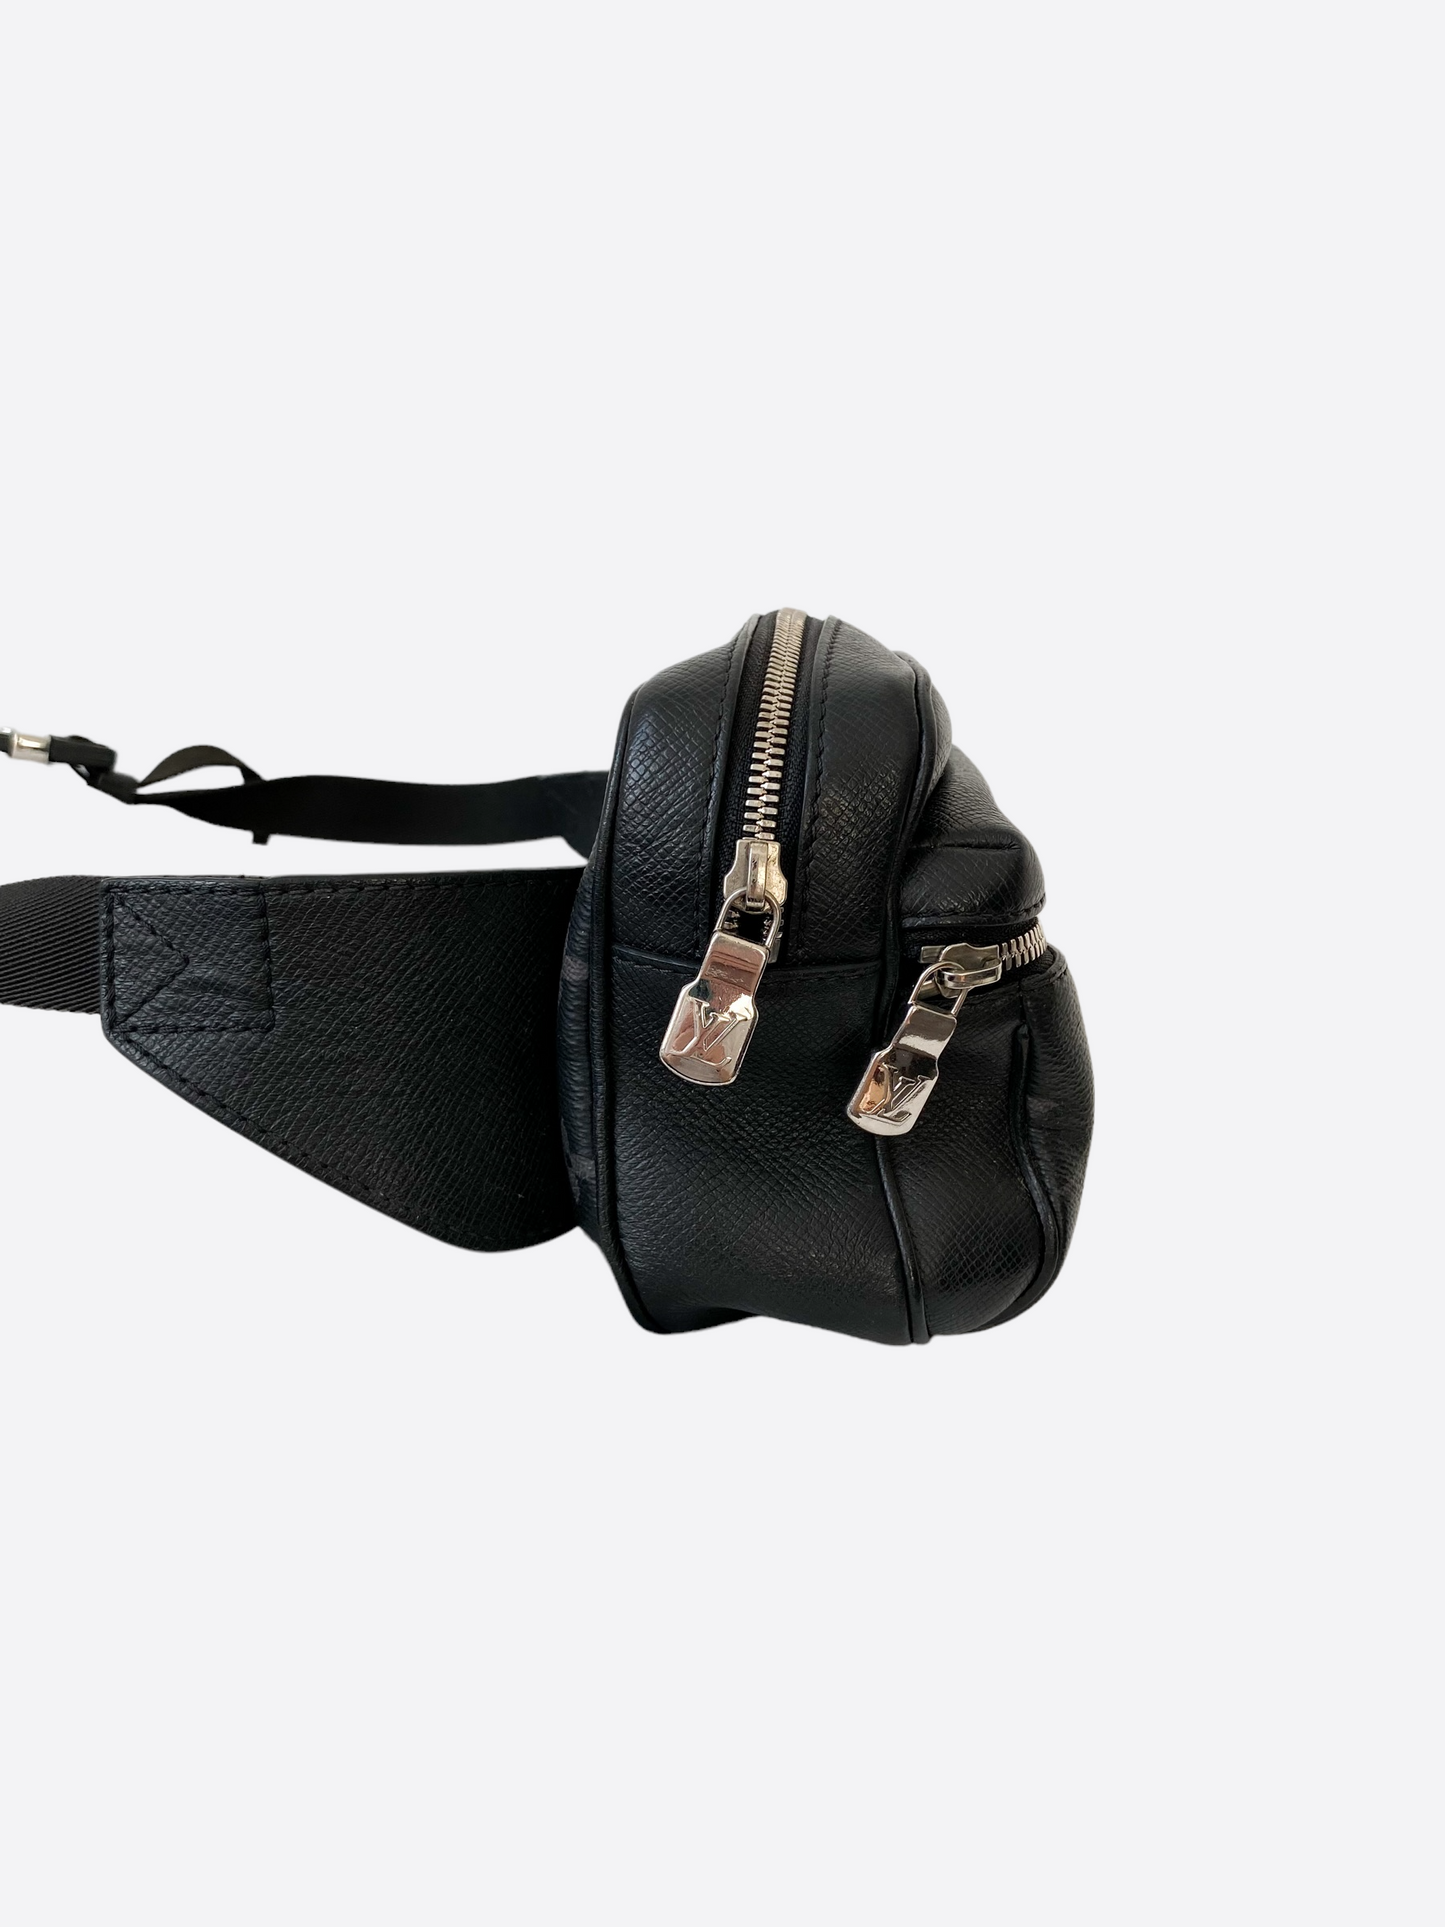 Pre-Owned Louis Vuitton Monogram Bumbag Outdoor Belt Bag (Good